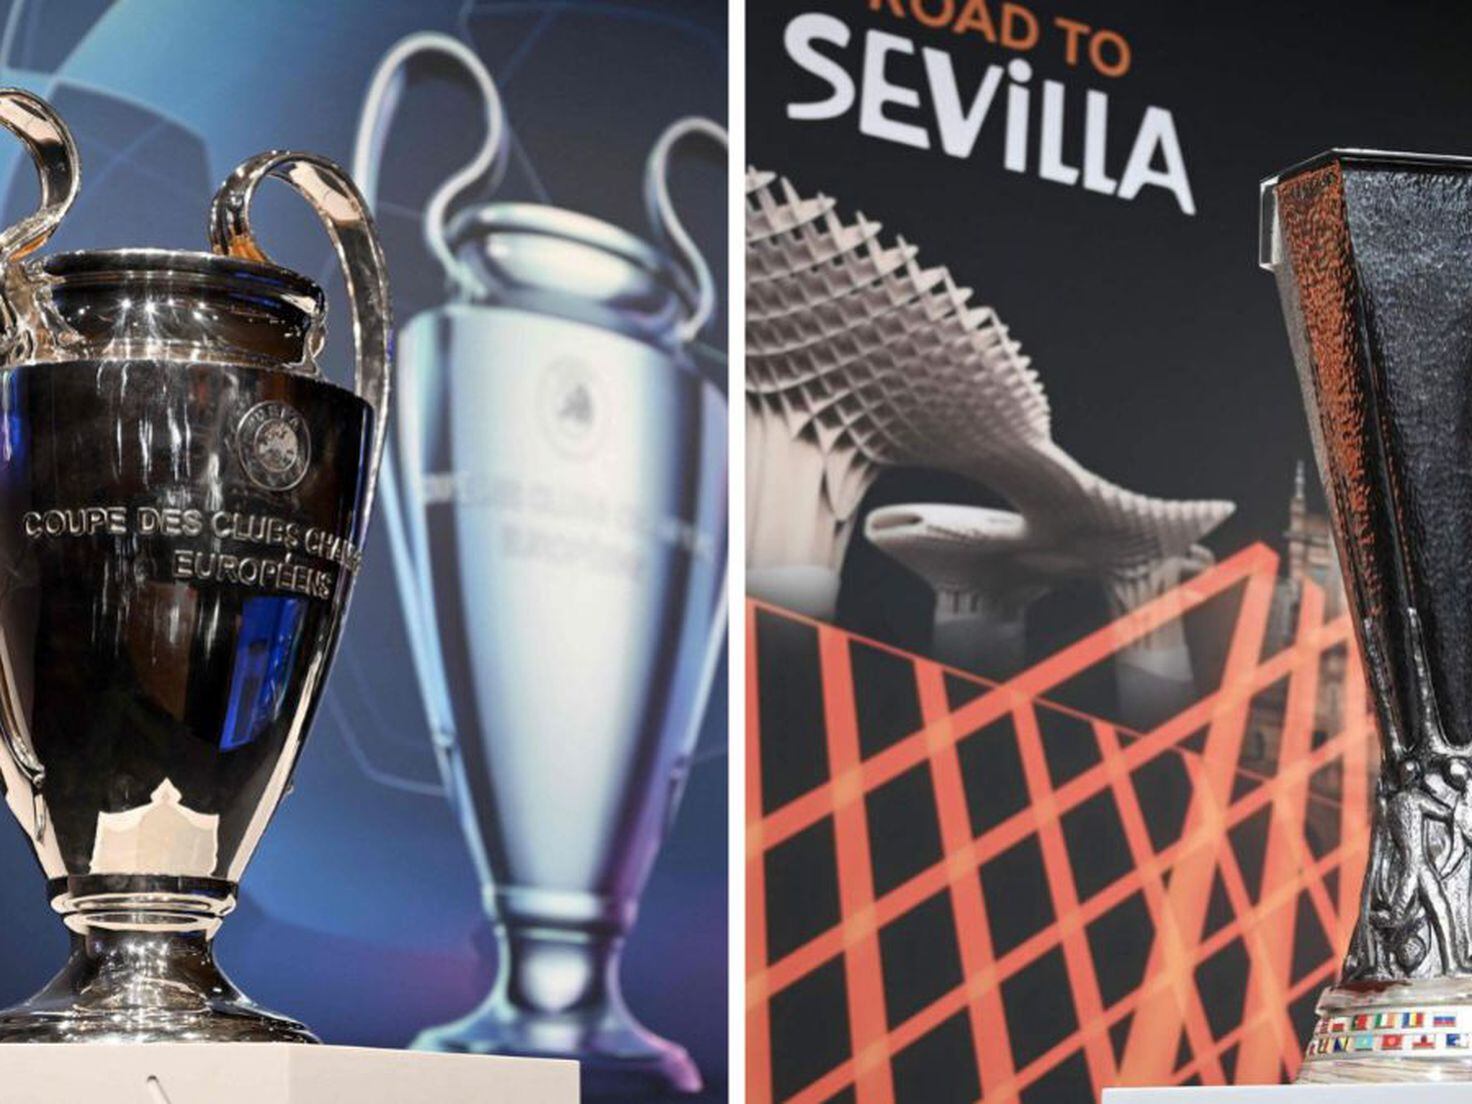 BT Sport brings UEFA Champions League Final LIVE on  - Tech Digest